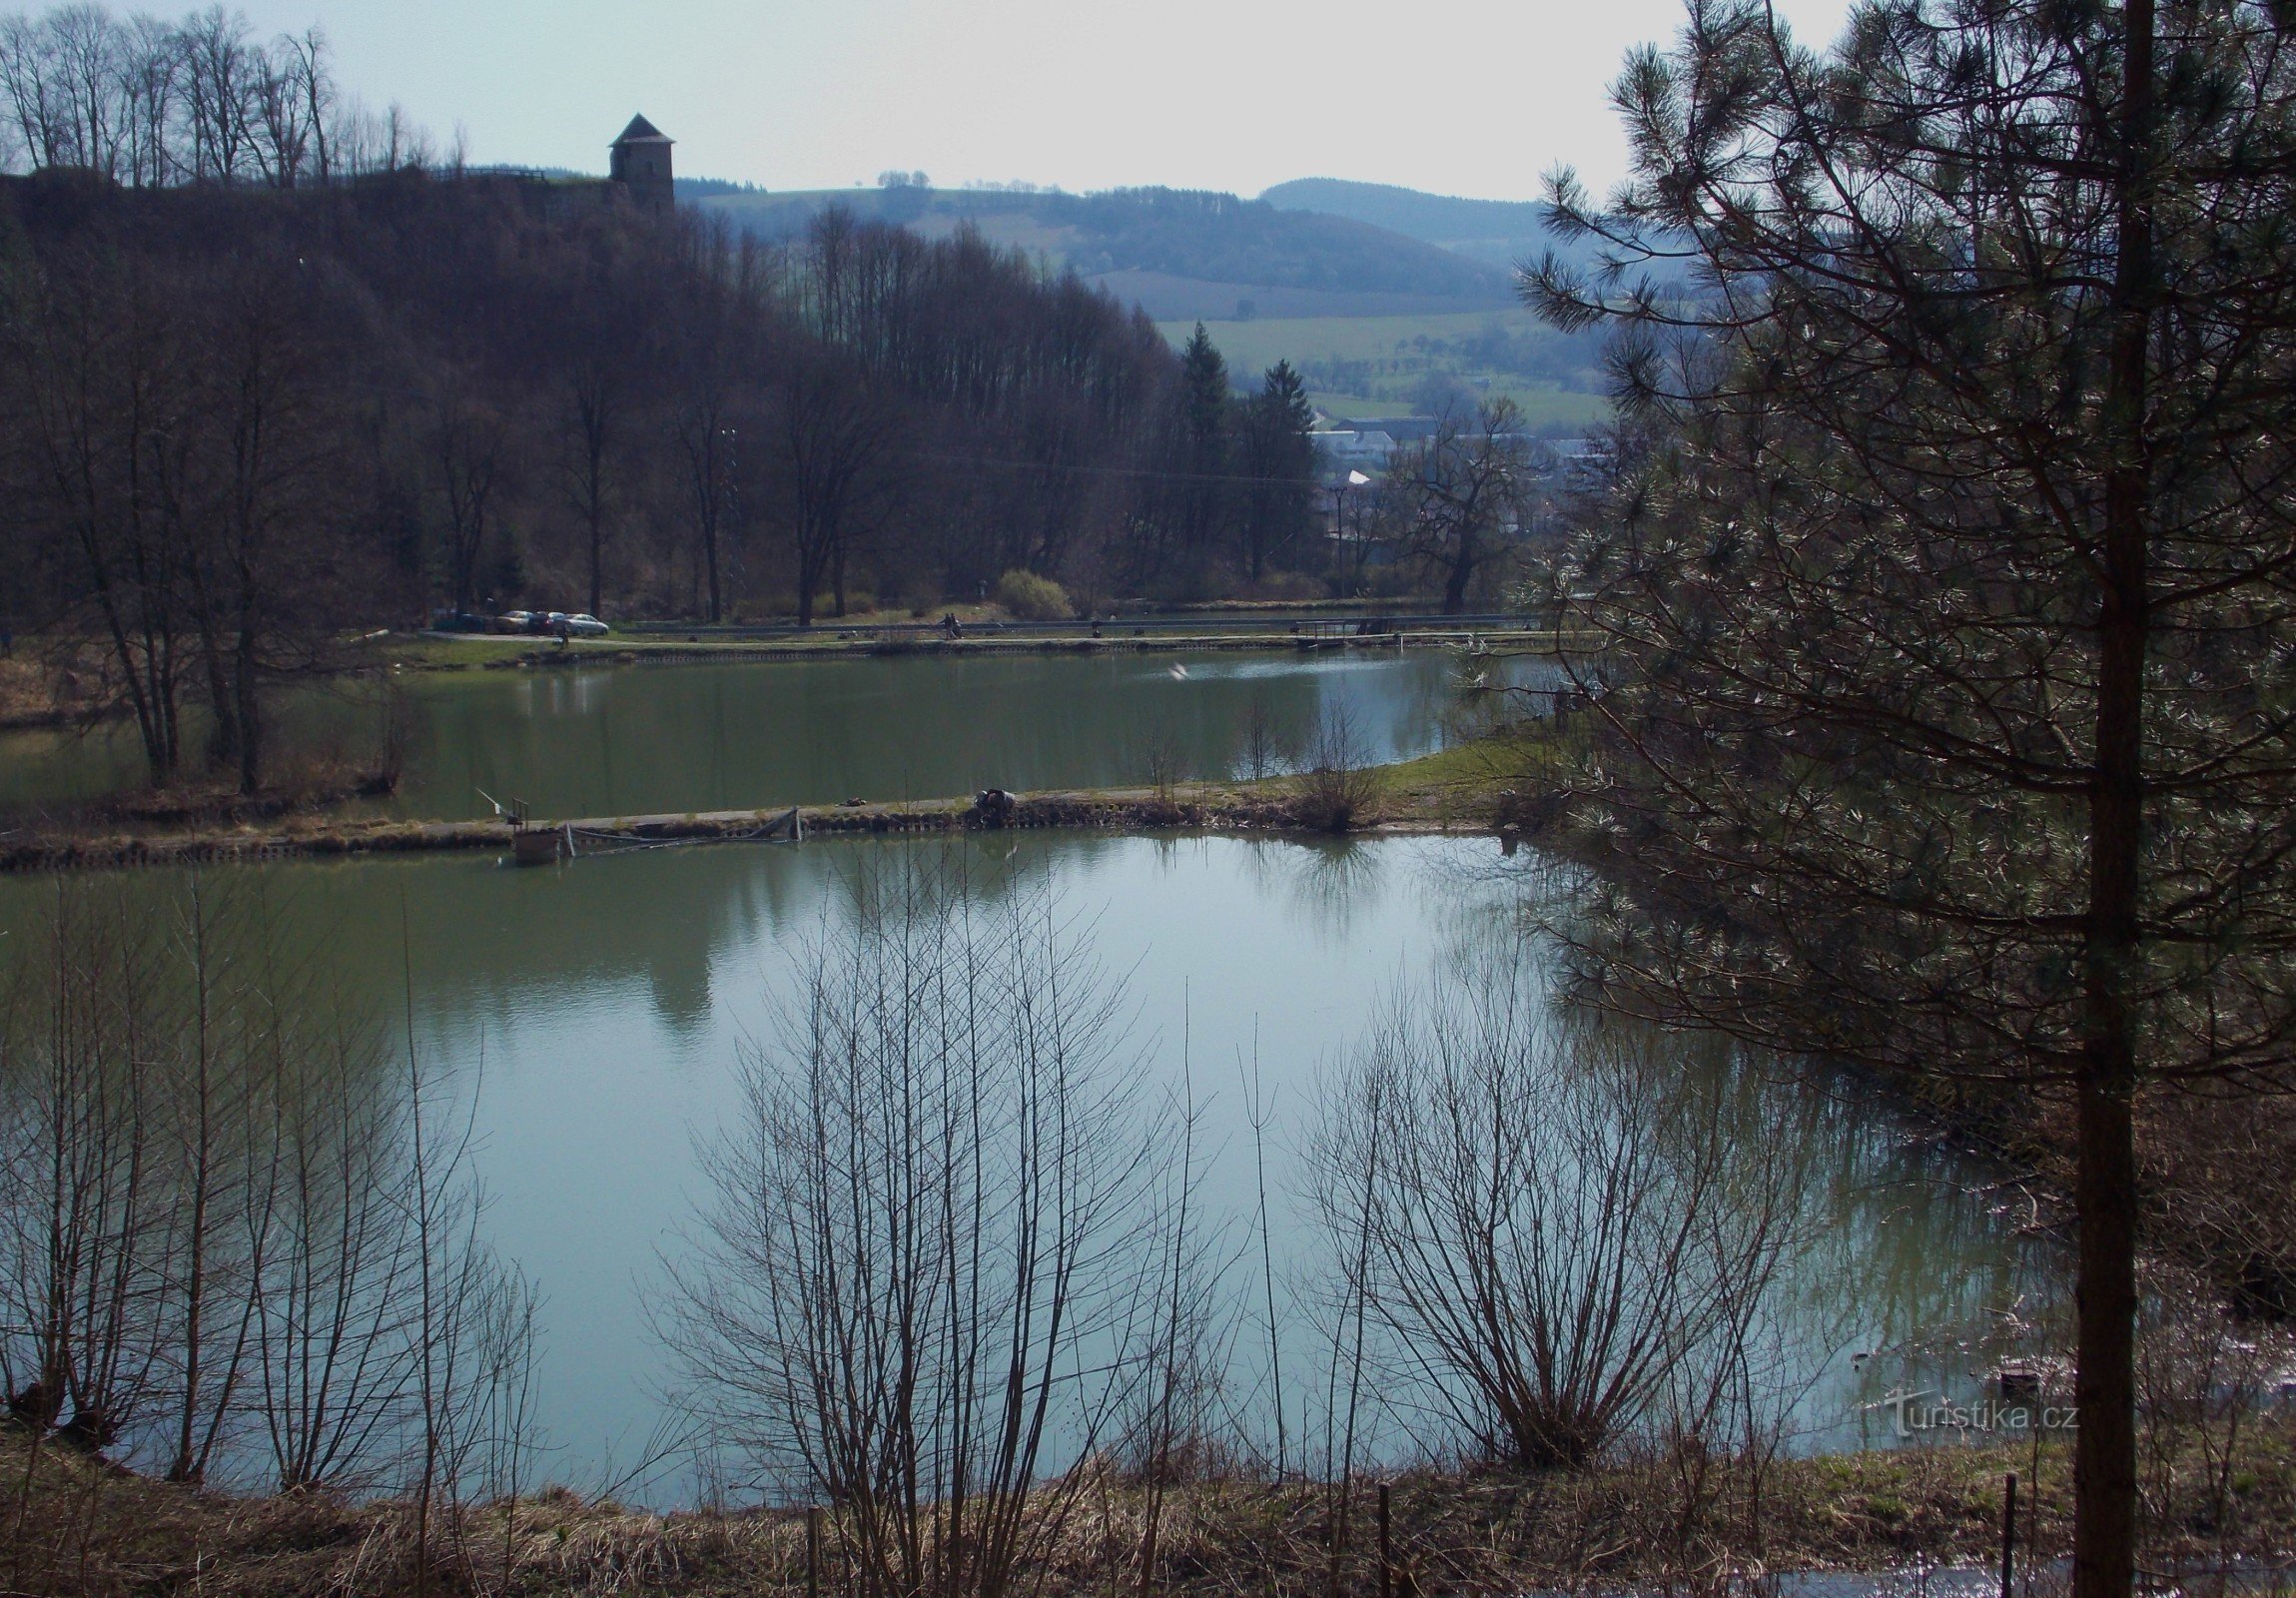 Ao redor das lagoas Brumov sob o Castelo Brumov